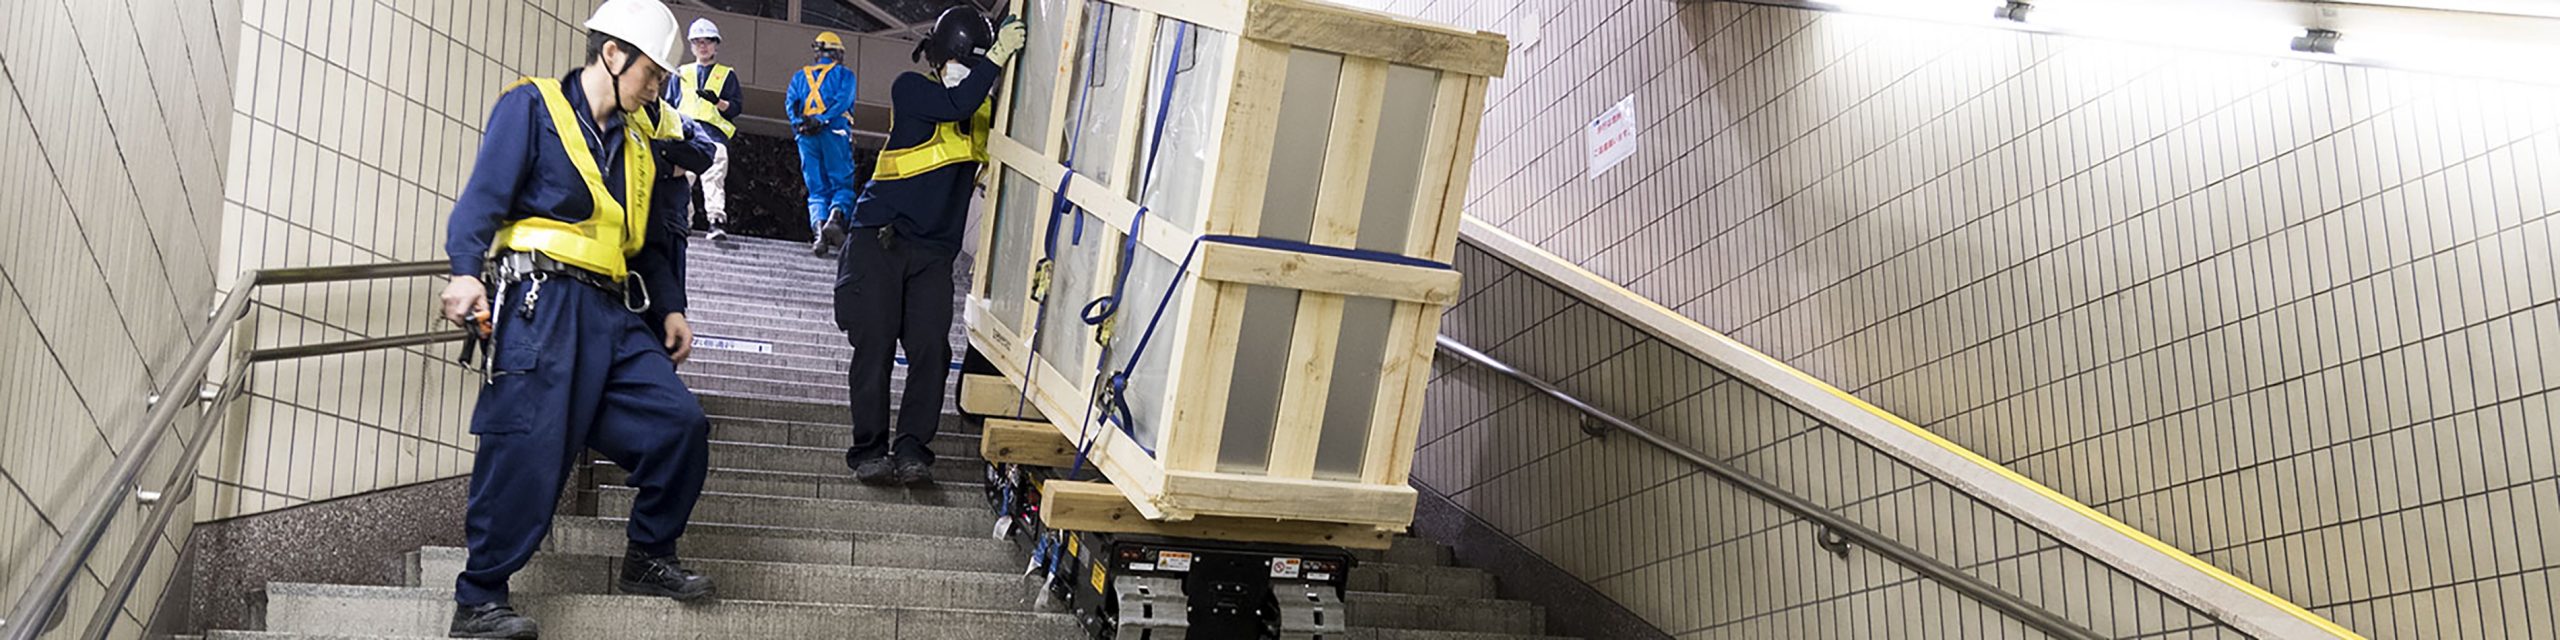 material handling staircase transportation equipment